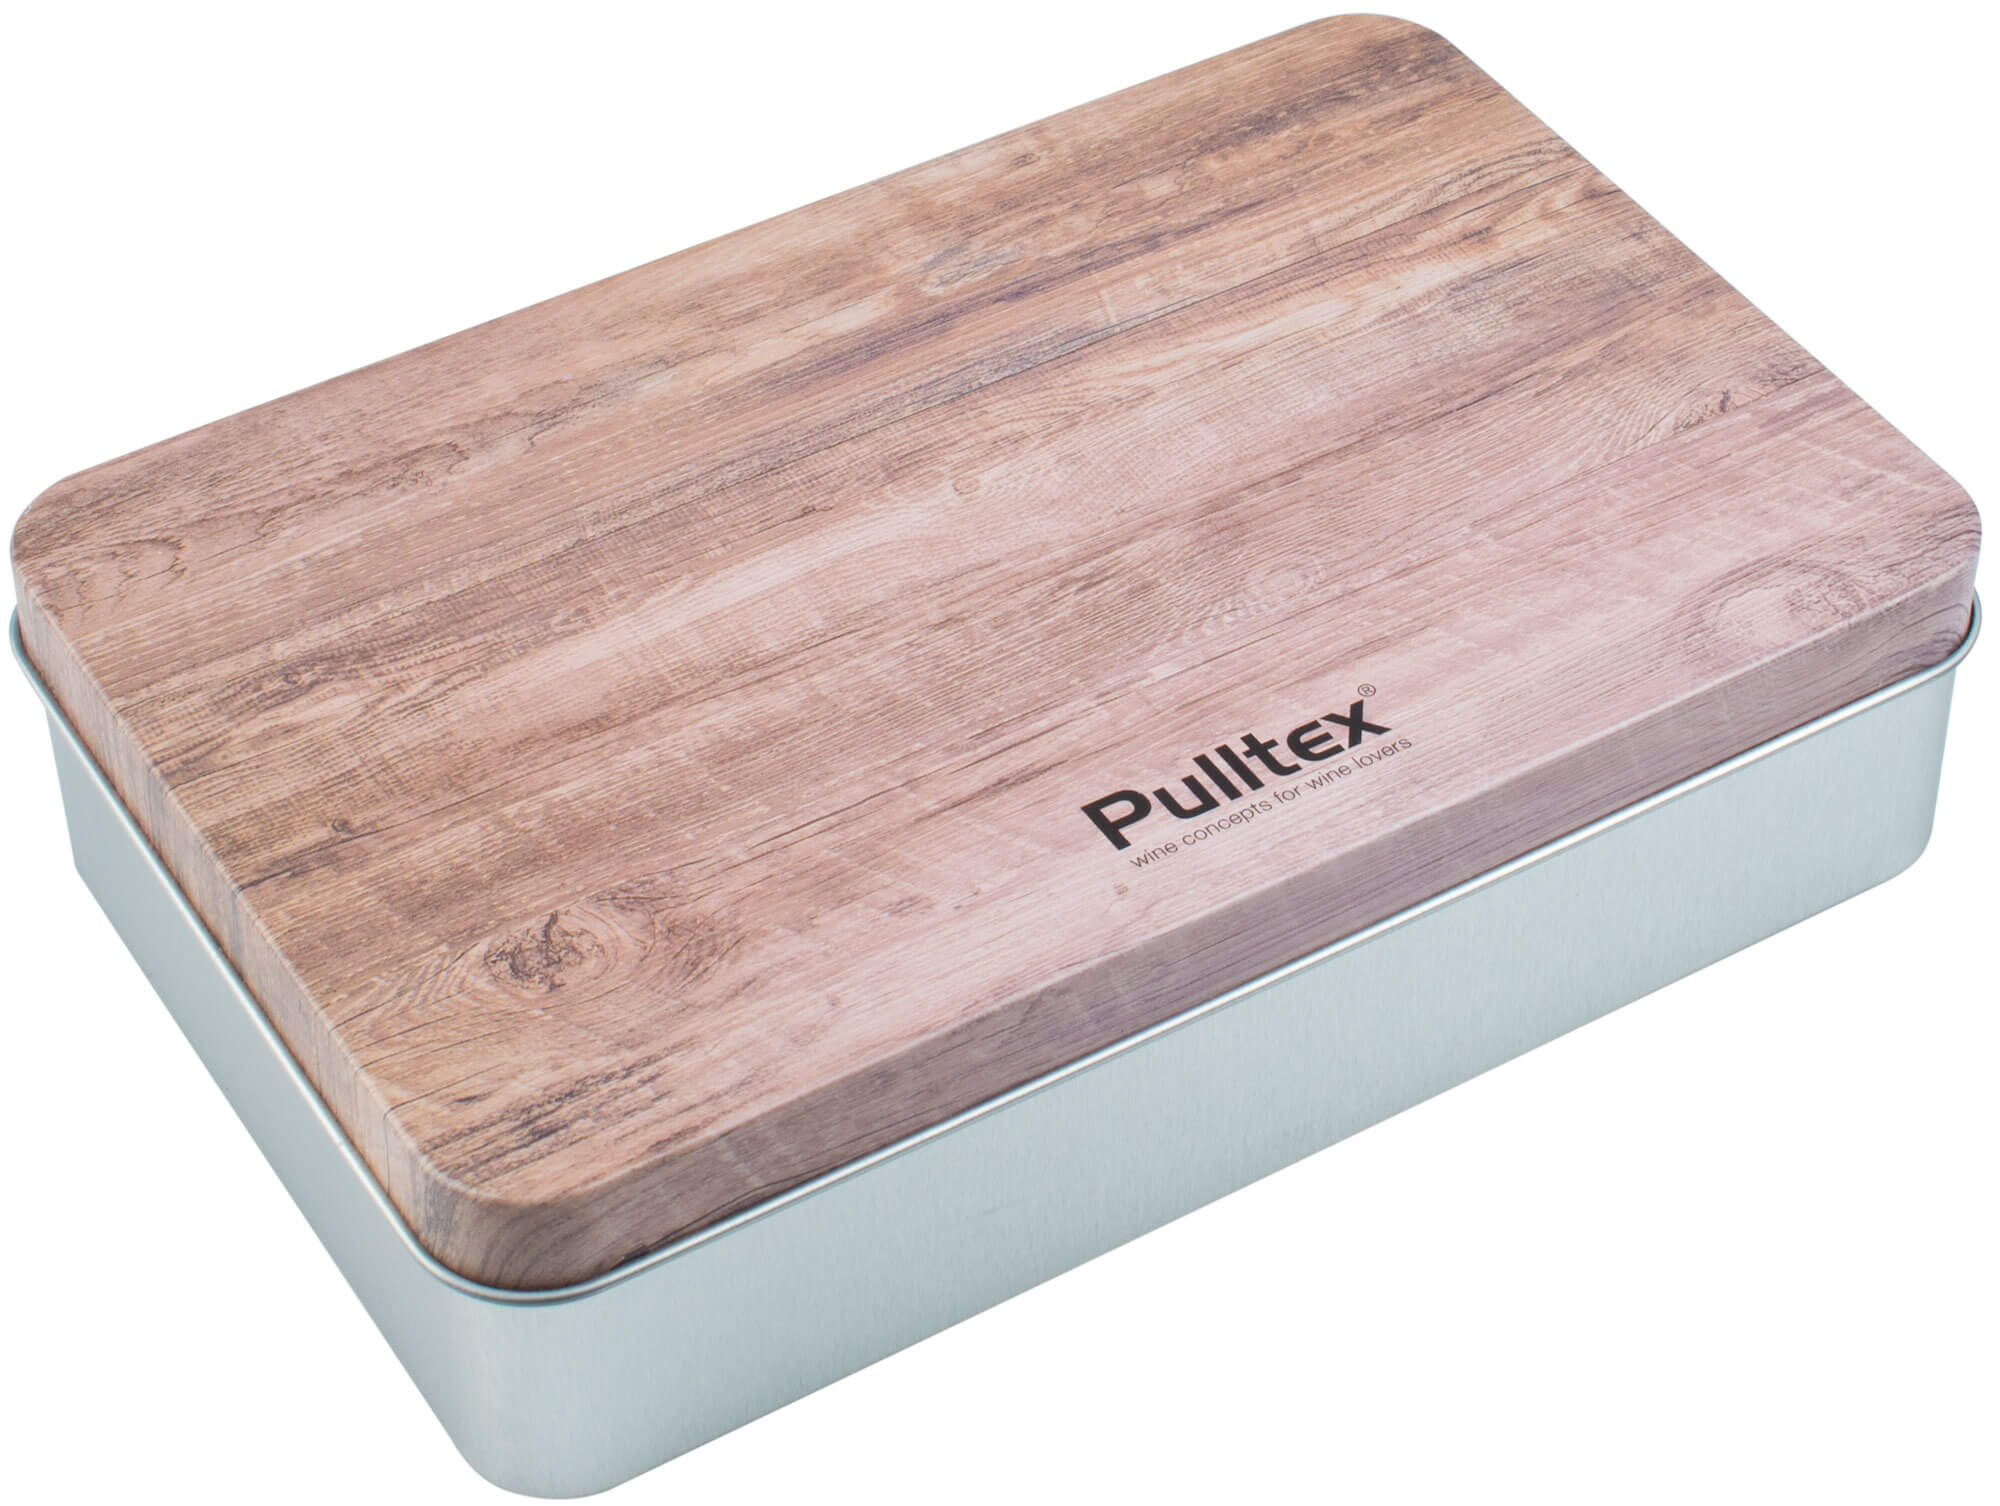 Wine Set de Luxe, Pulltex (Box)